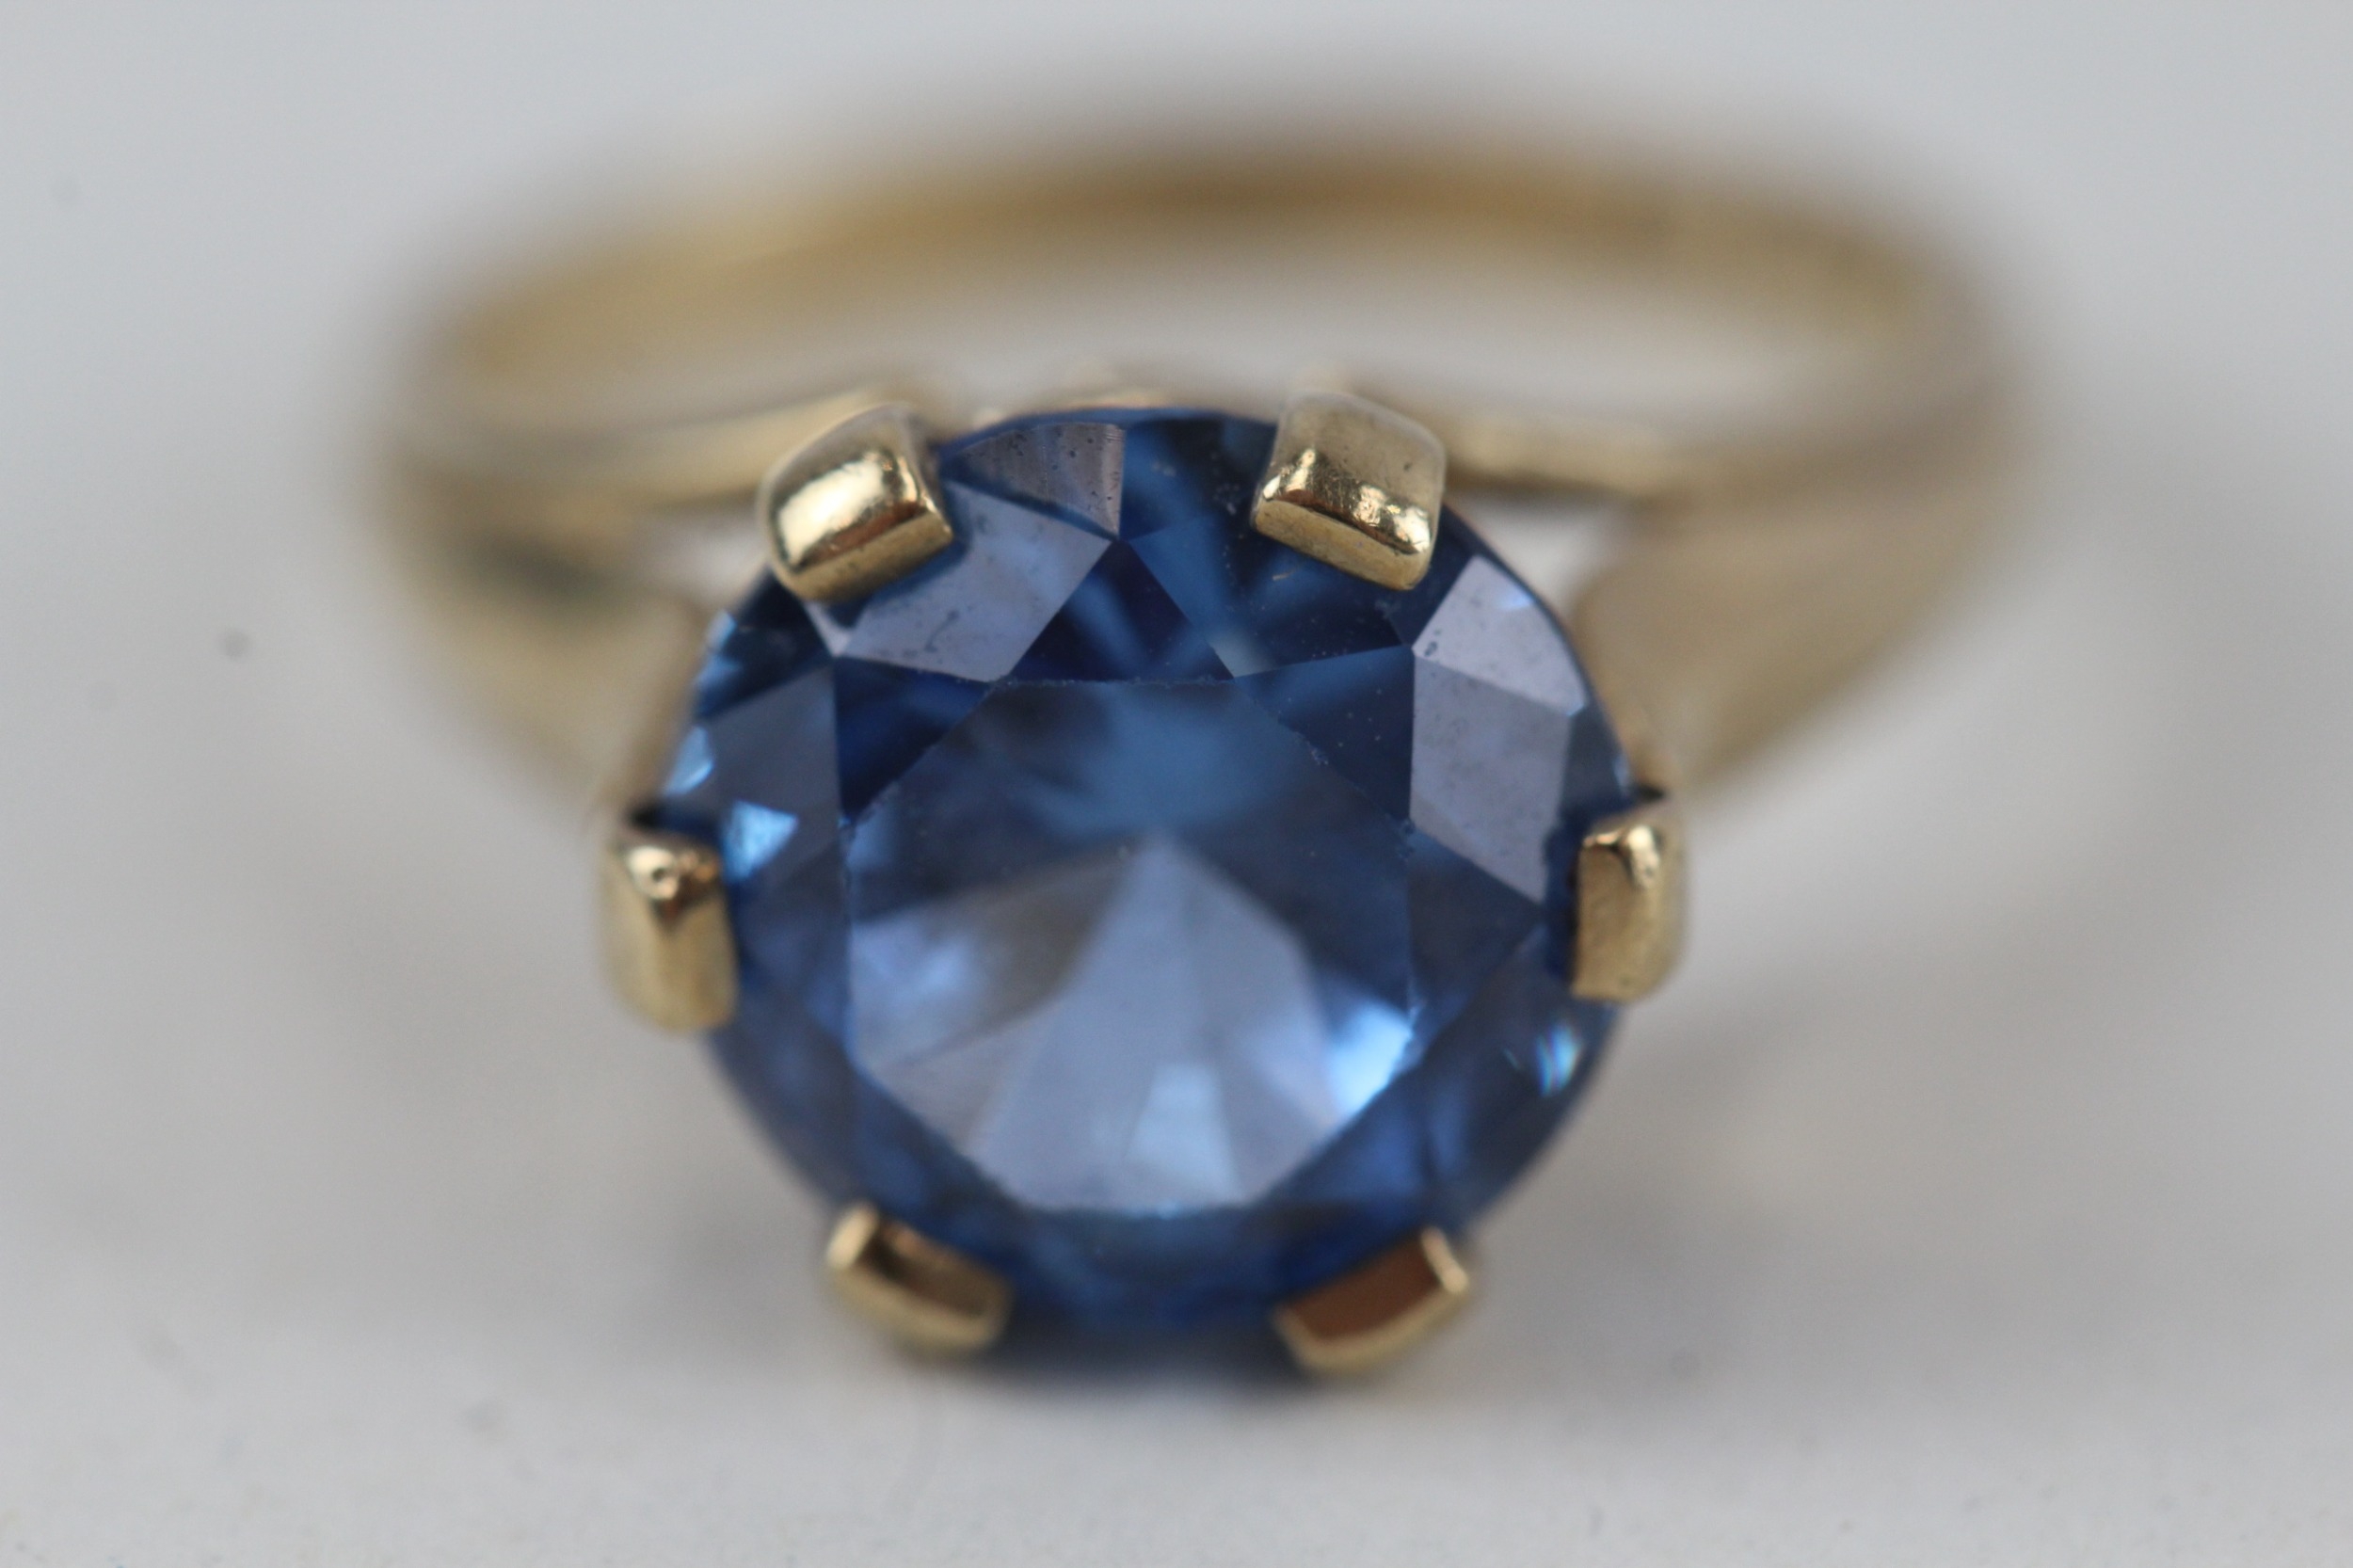 9ct gold blue gemstone dress ring, claw set (3.3g) - Image 2 of 4